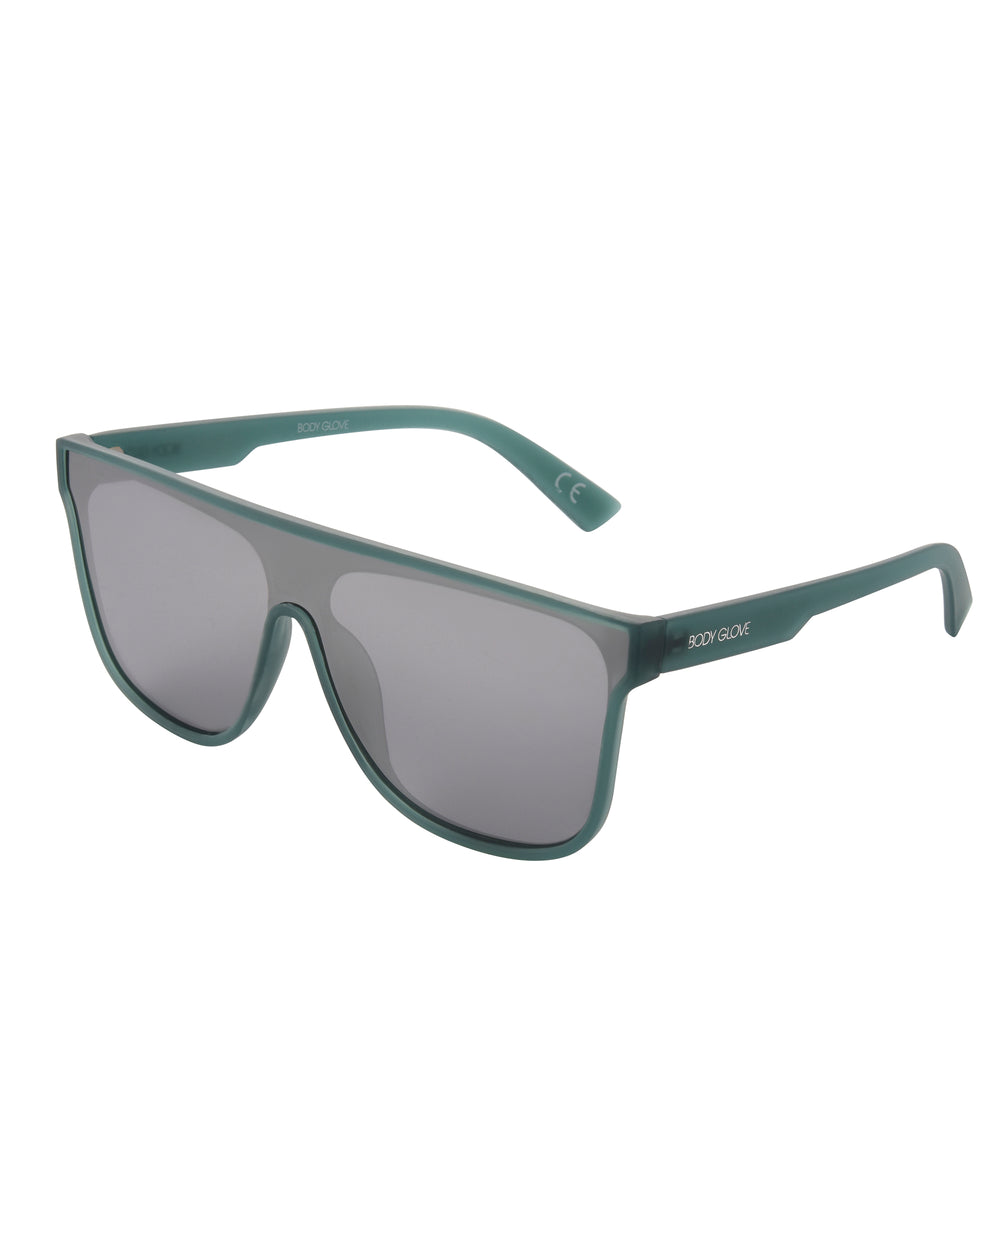 Toby Shield Sunglasses, Green